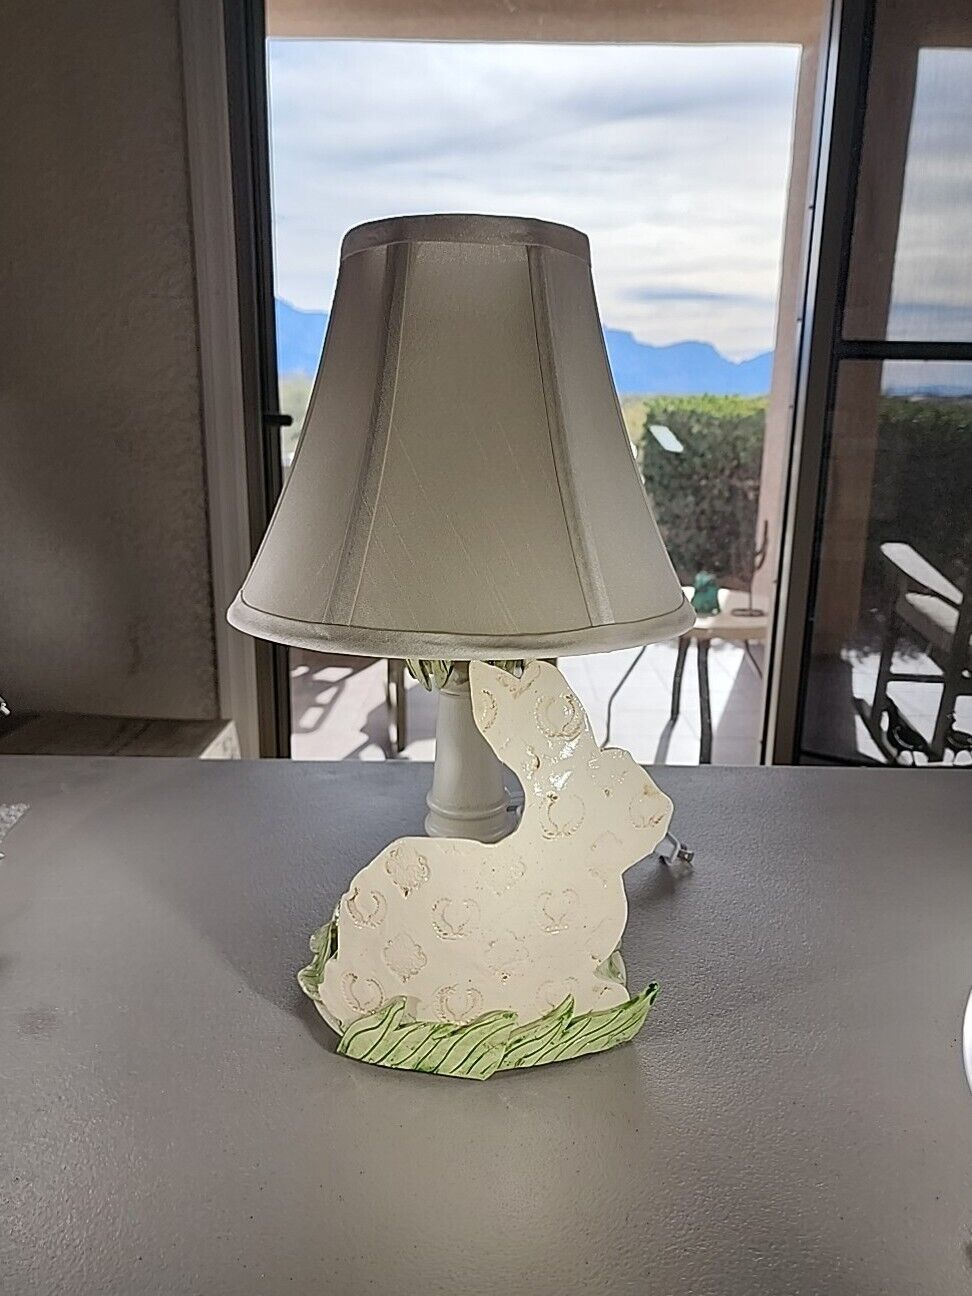 Laura Haley Designs Ceramic Garden Rabbit Bunny Charming Table Lamp 